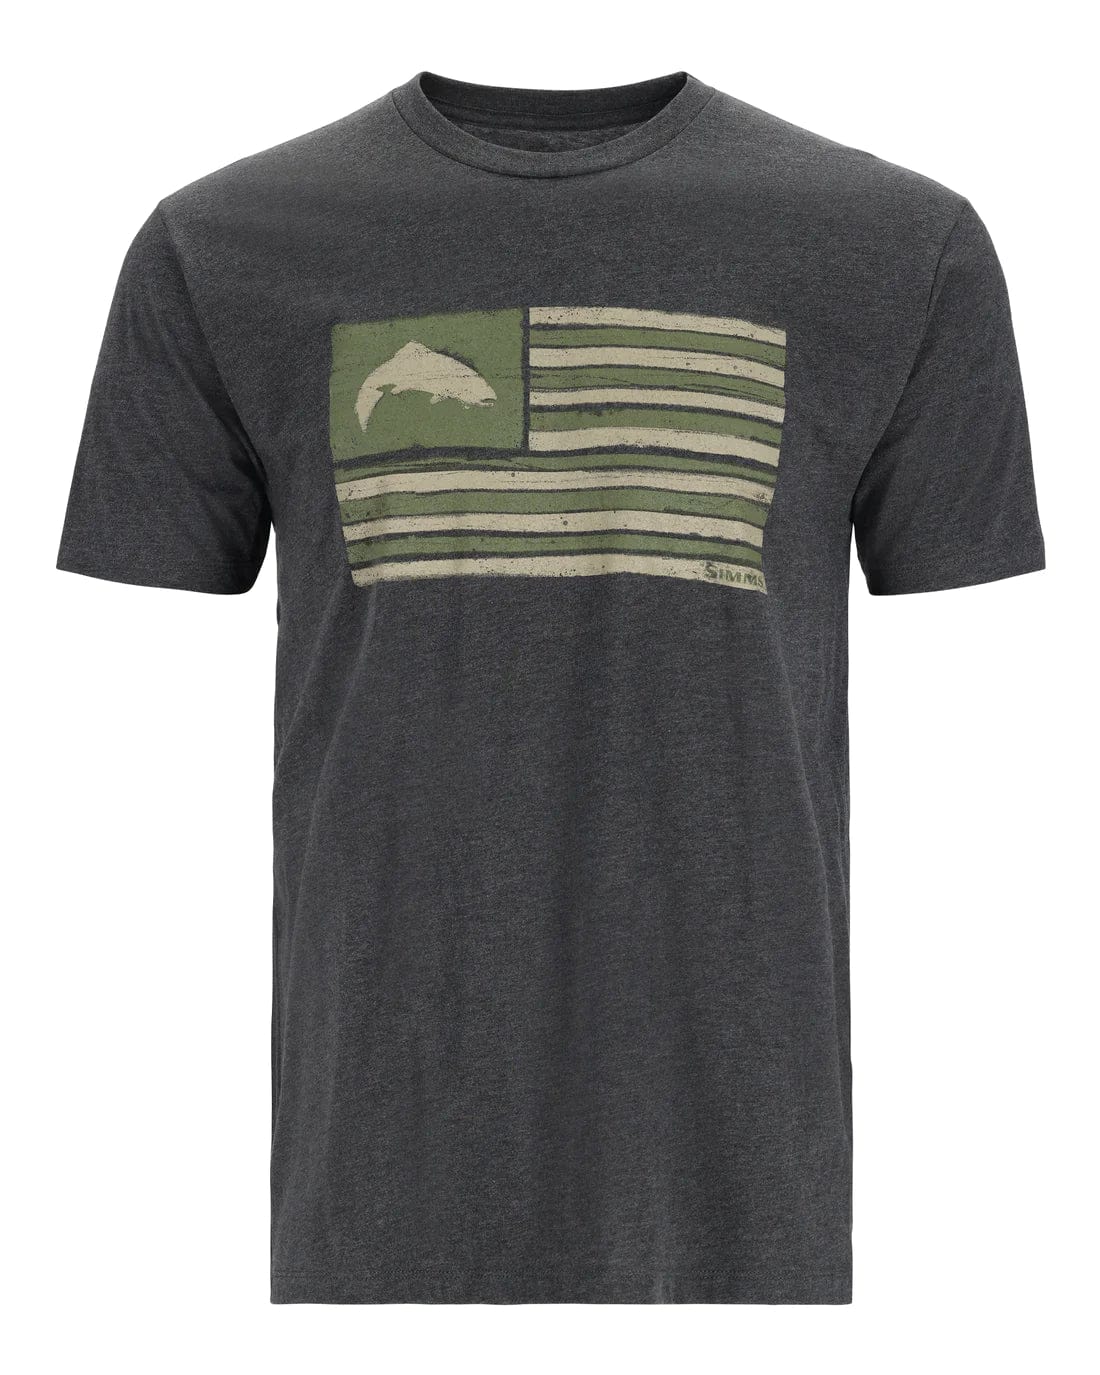 Men&#39;s Simms Americana T-Shirt